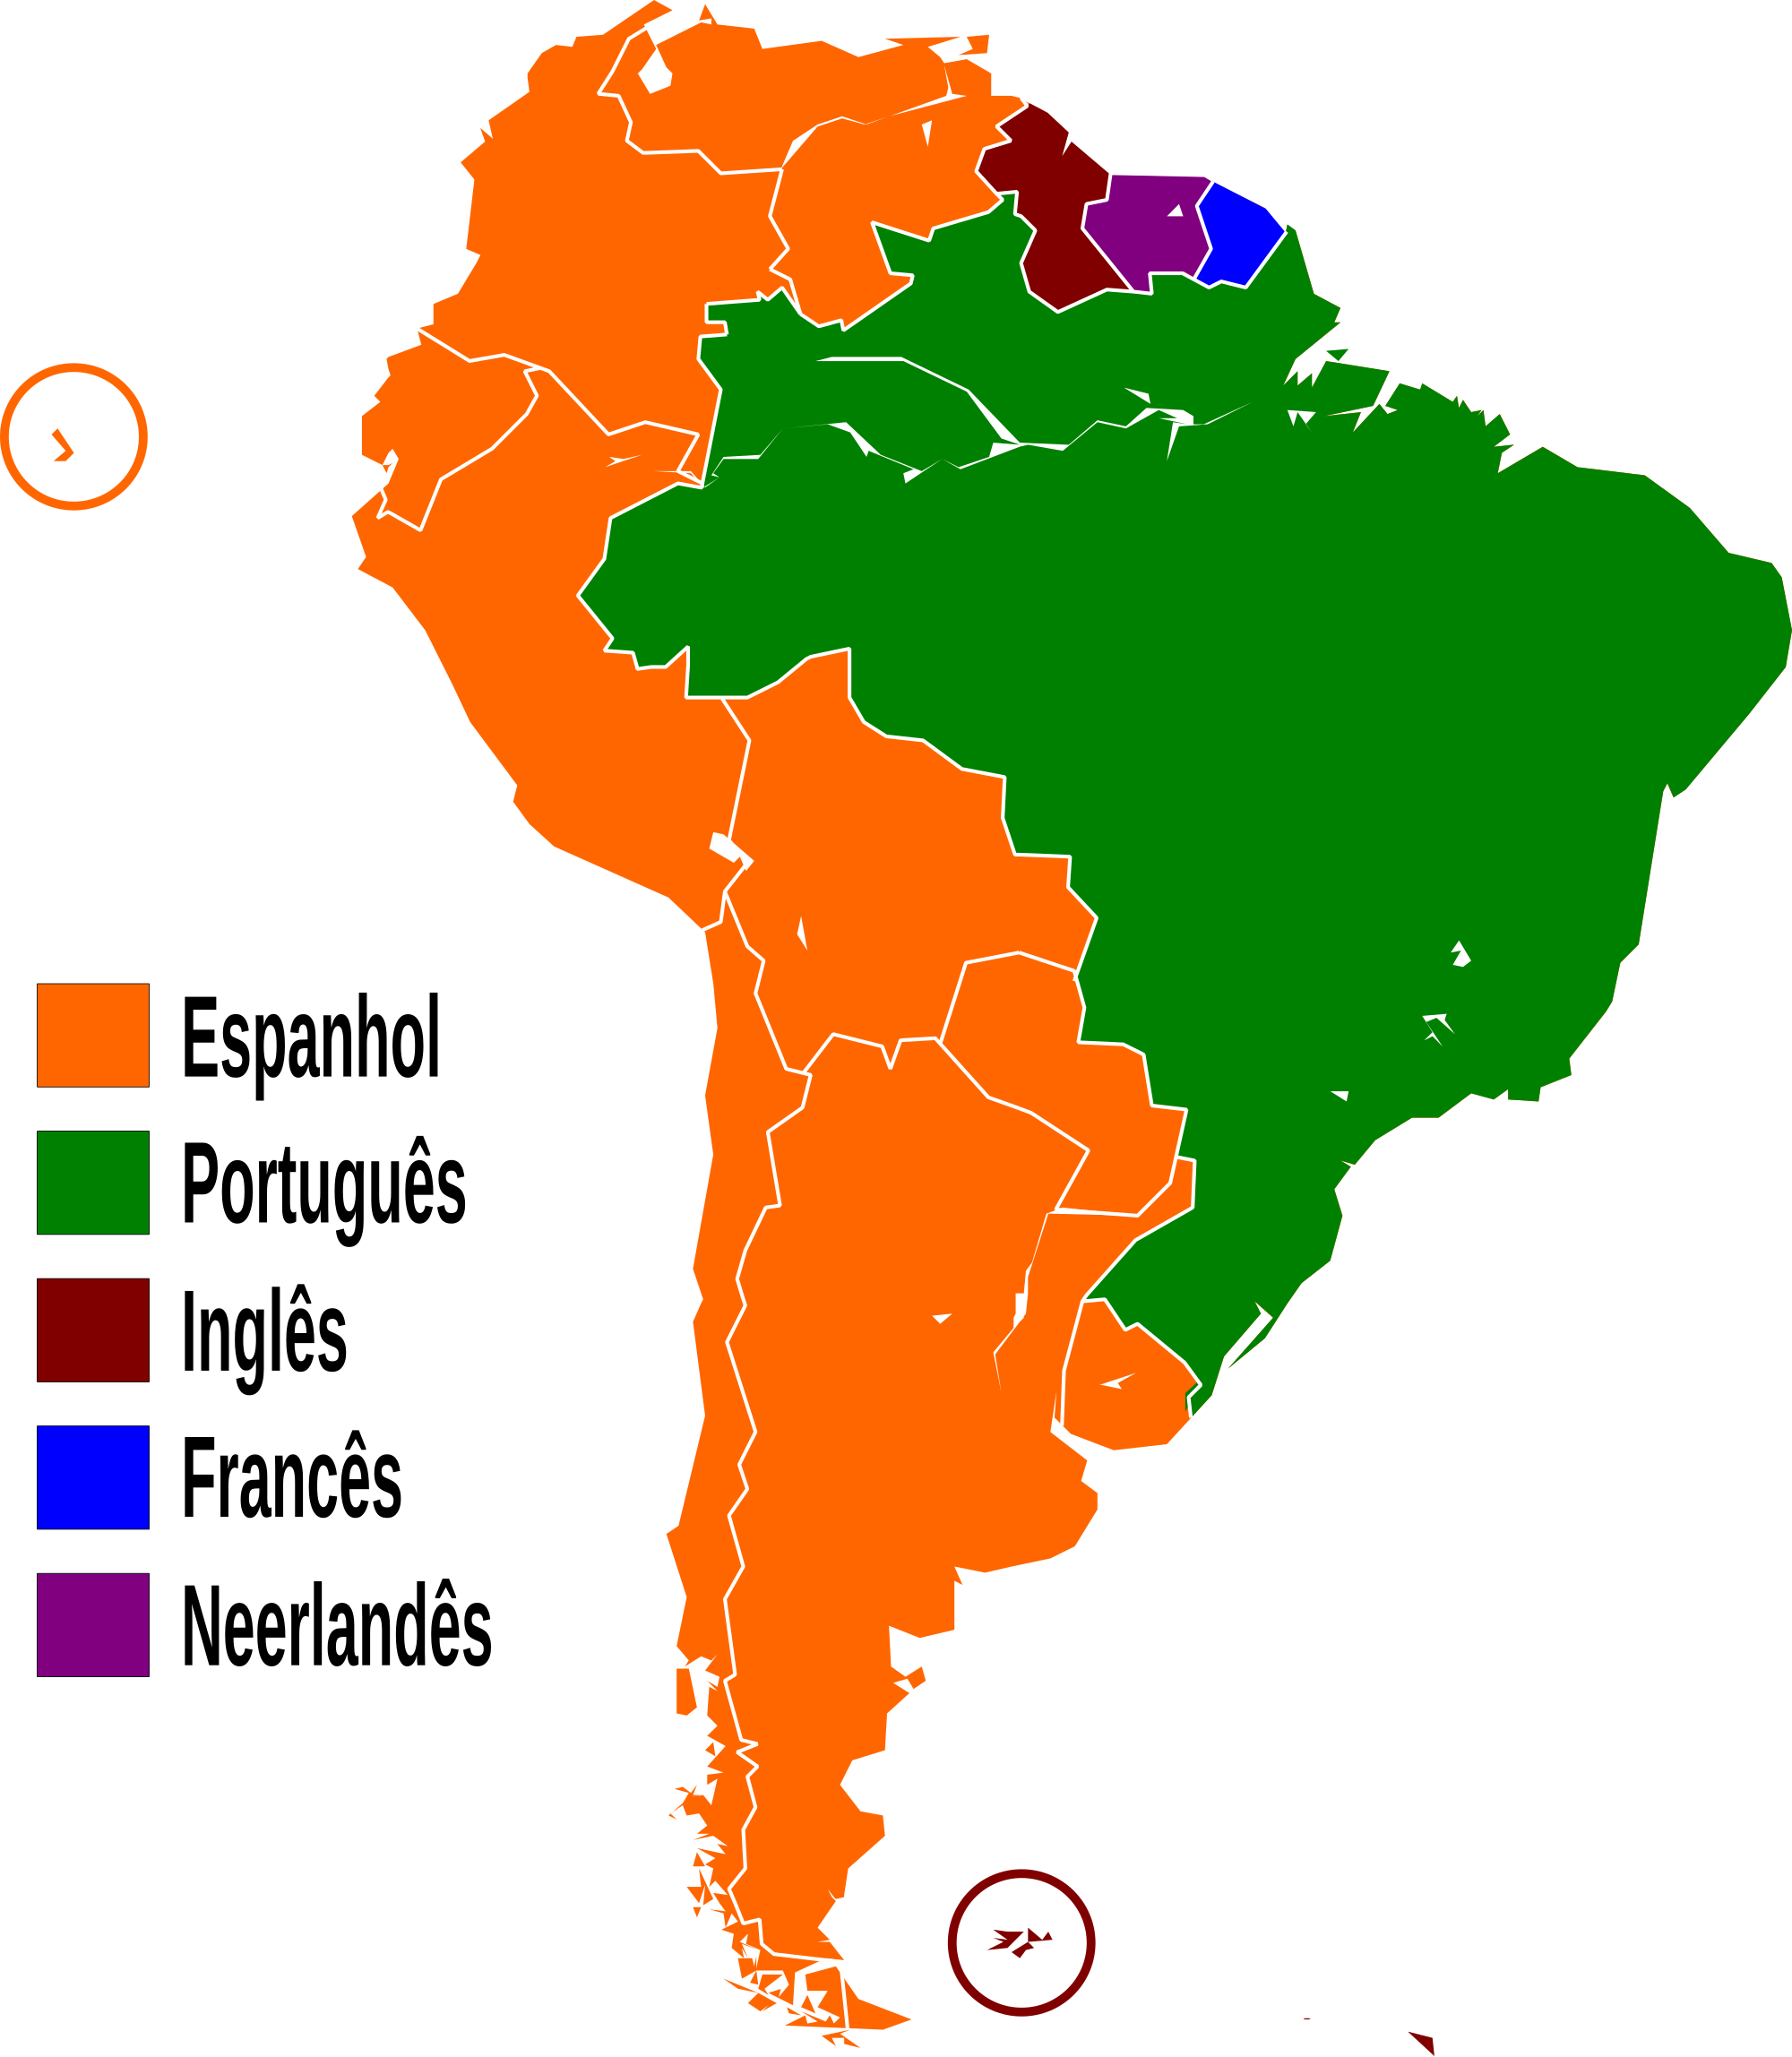 caracteristicas sociales de los paises de america latina